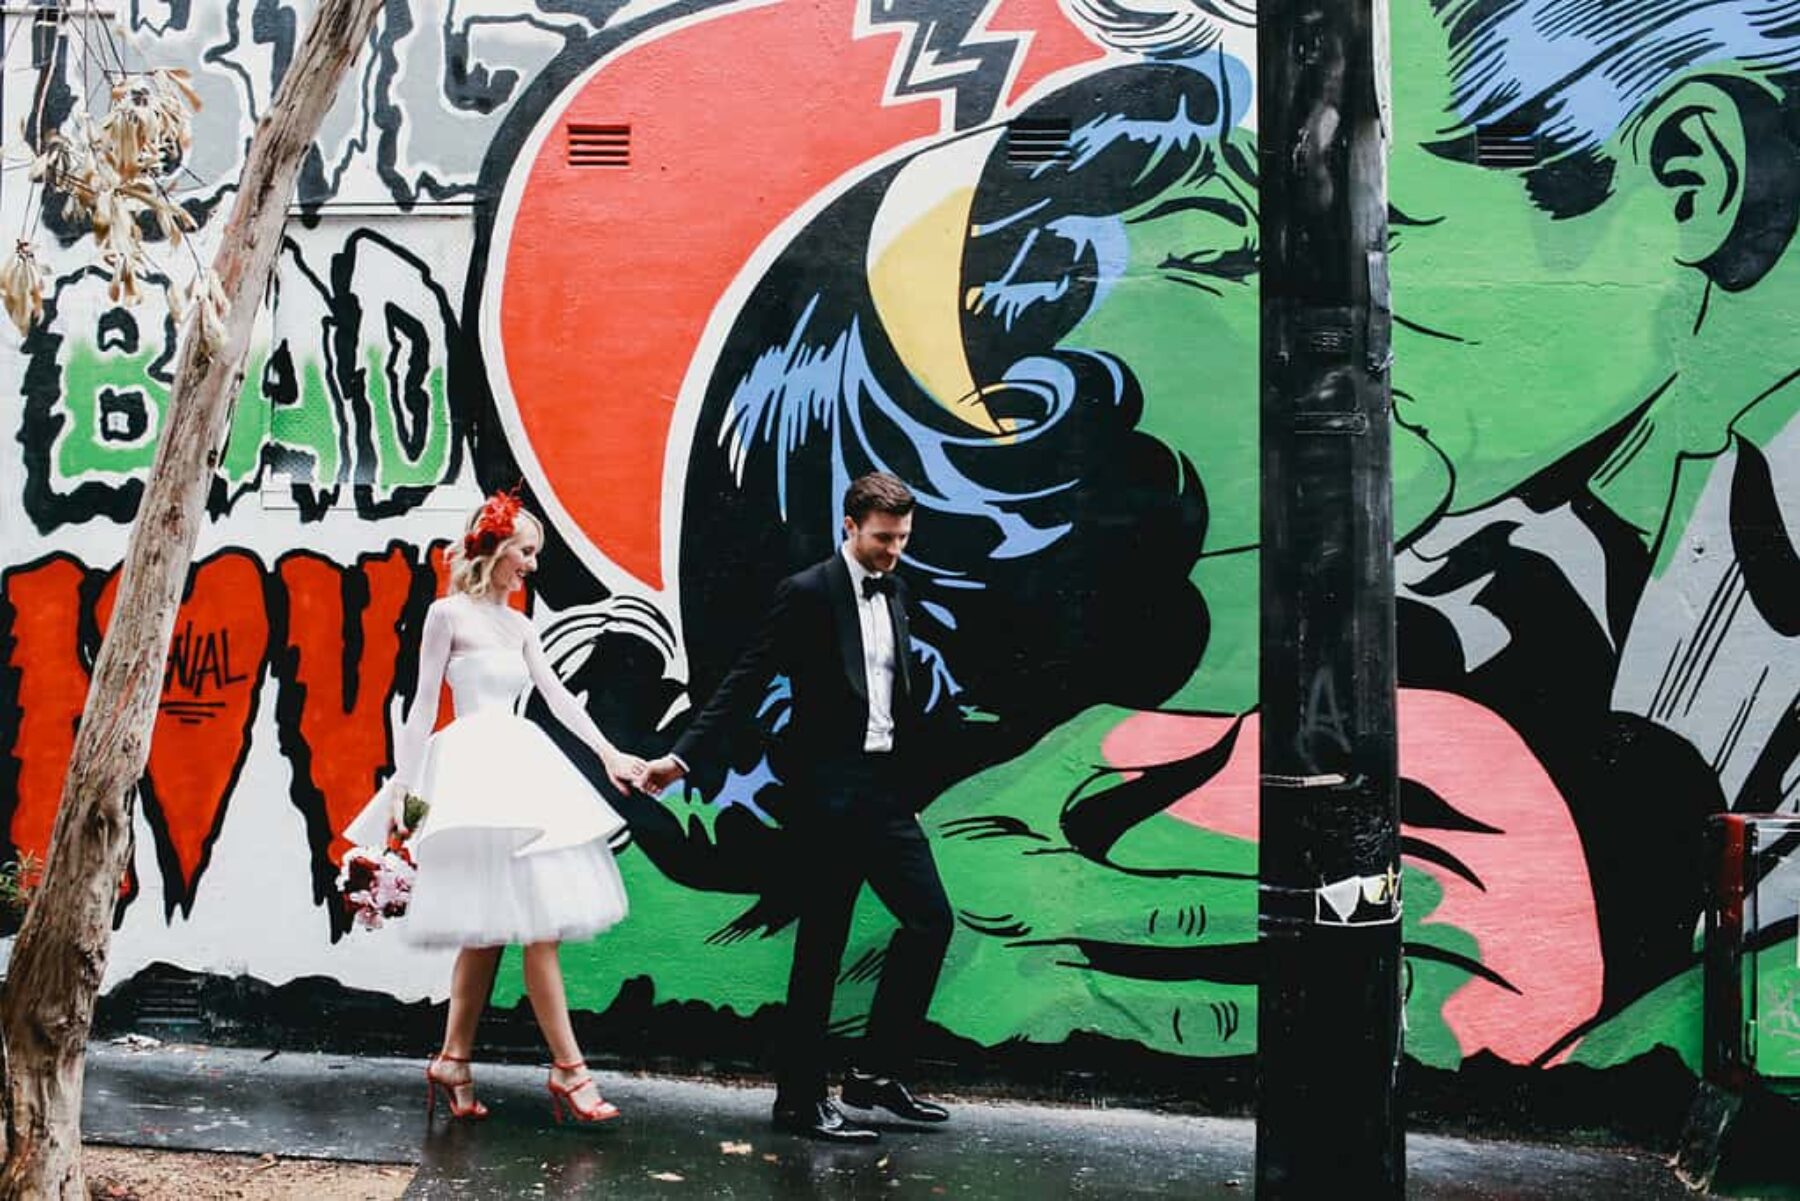 Epic Sydney wedding at Fairground Follies - photography by Lara Hotz